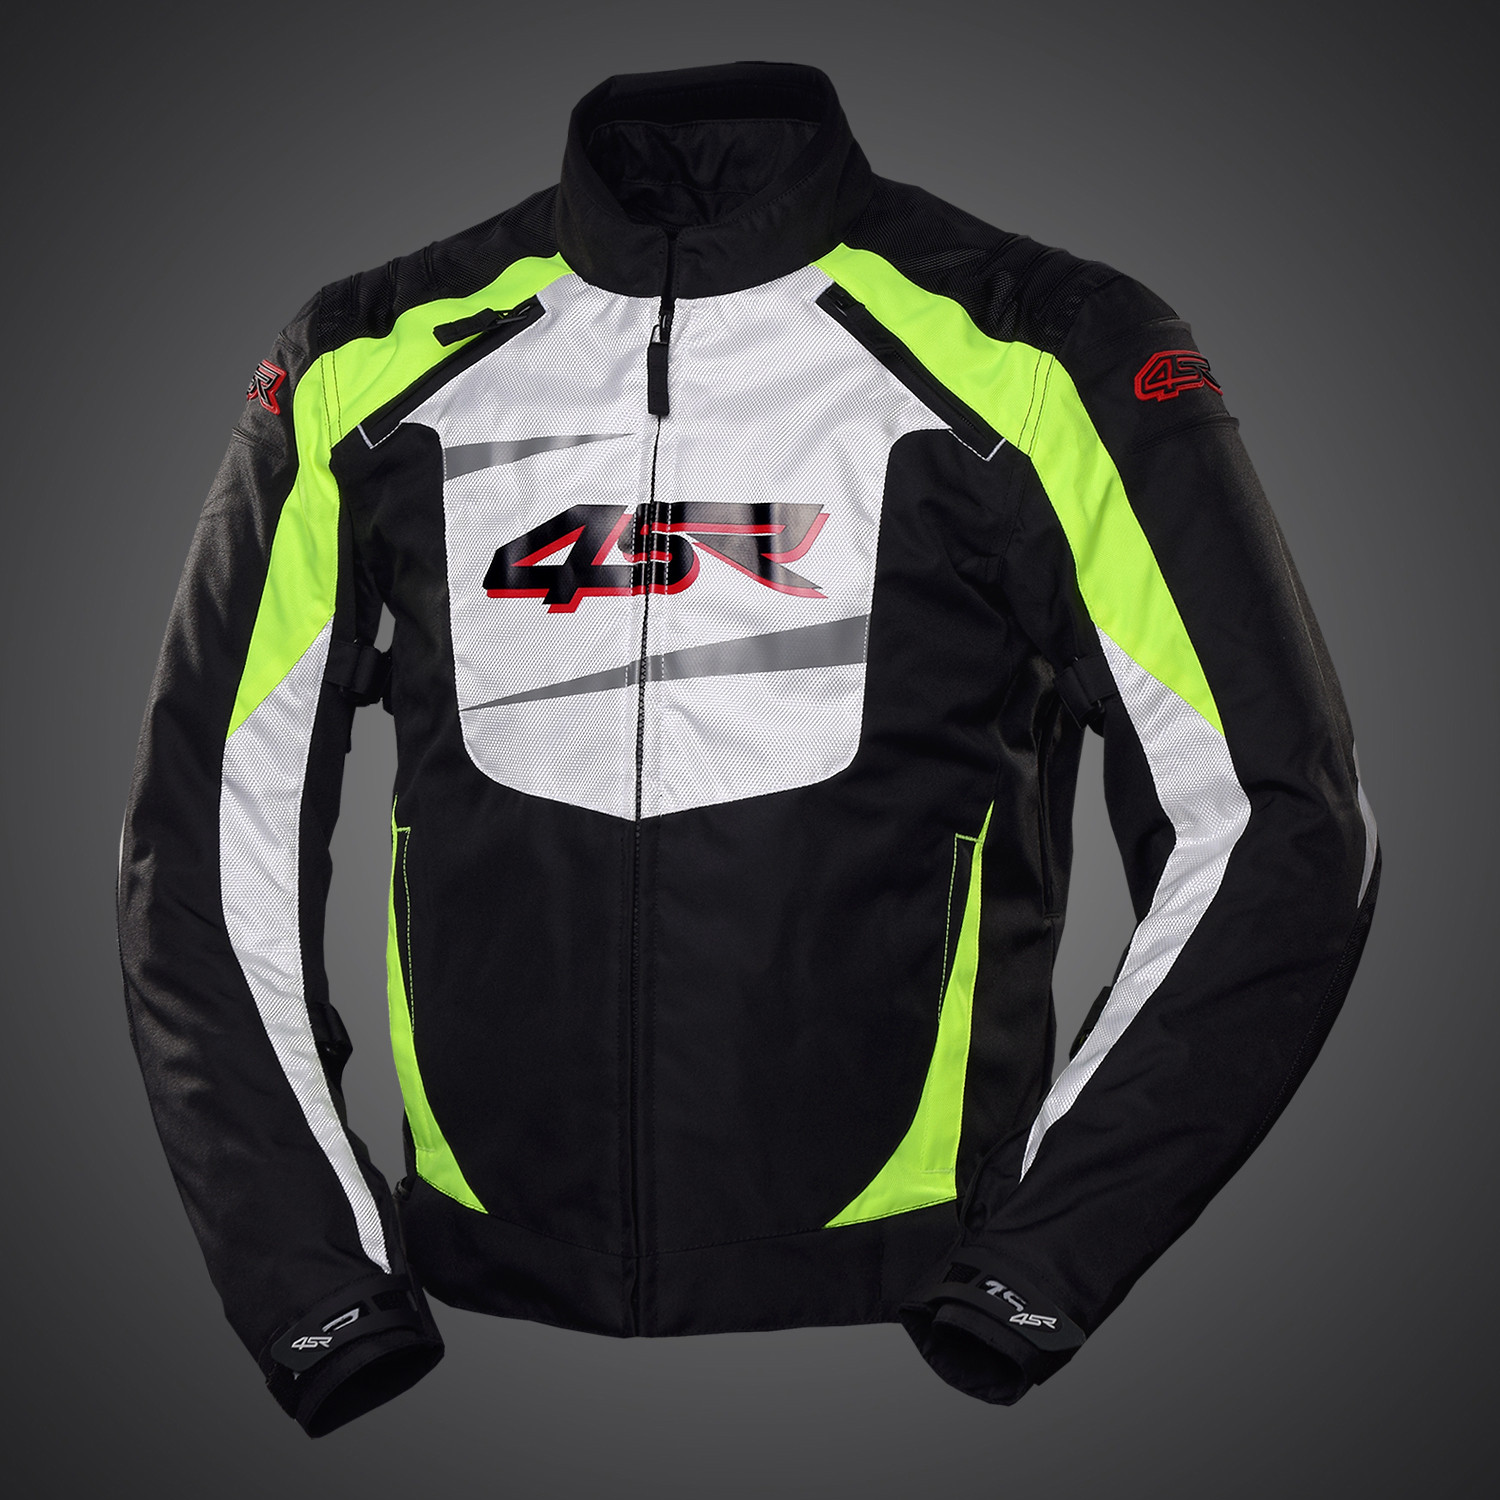 4SR Stunts - Neon Textile jacket